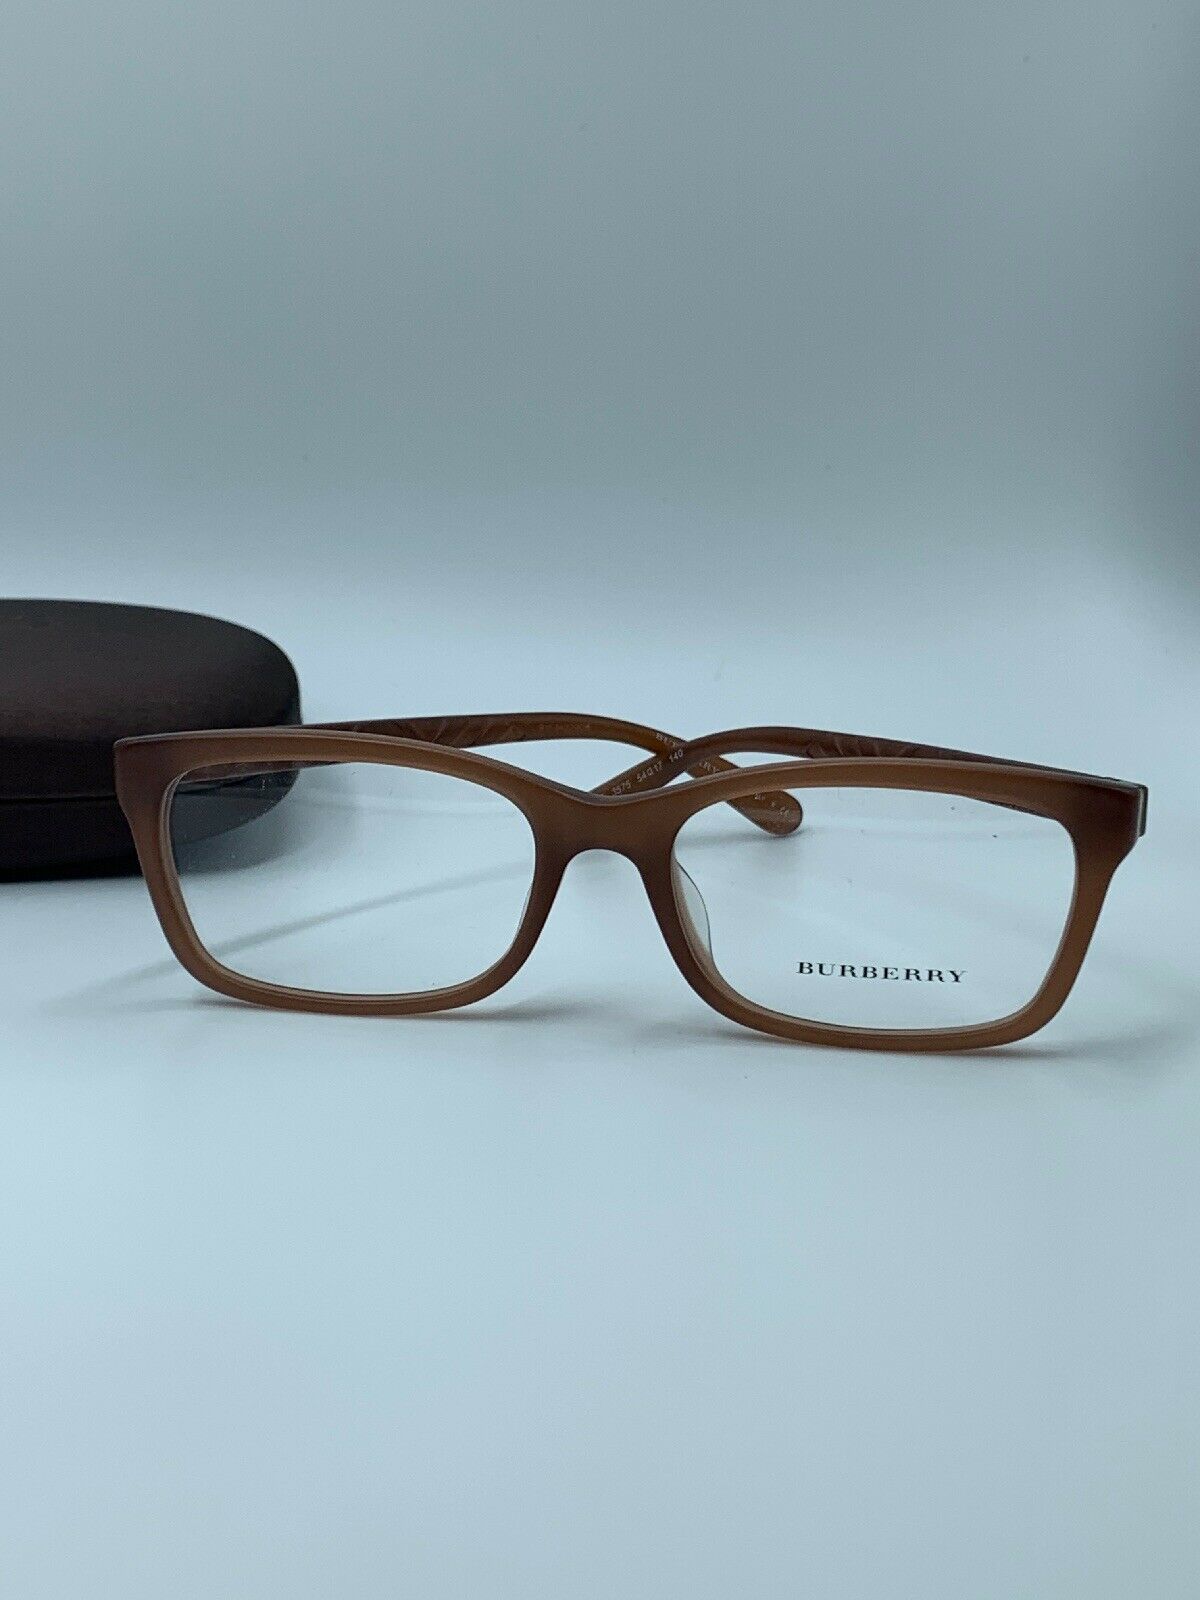 NEW BURBERRY B 2220 3575 Eyeglasses Optical Frames Glasses Matte Brown ...